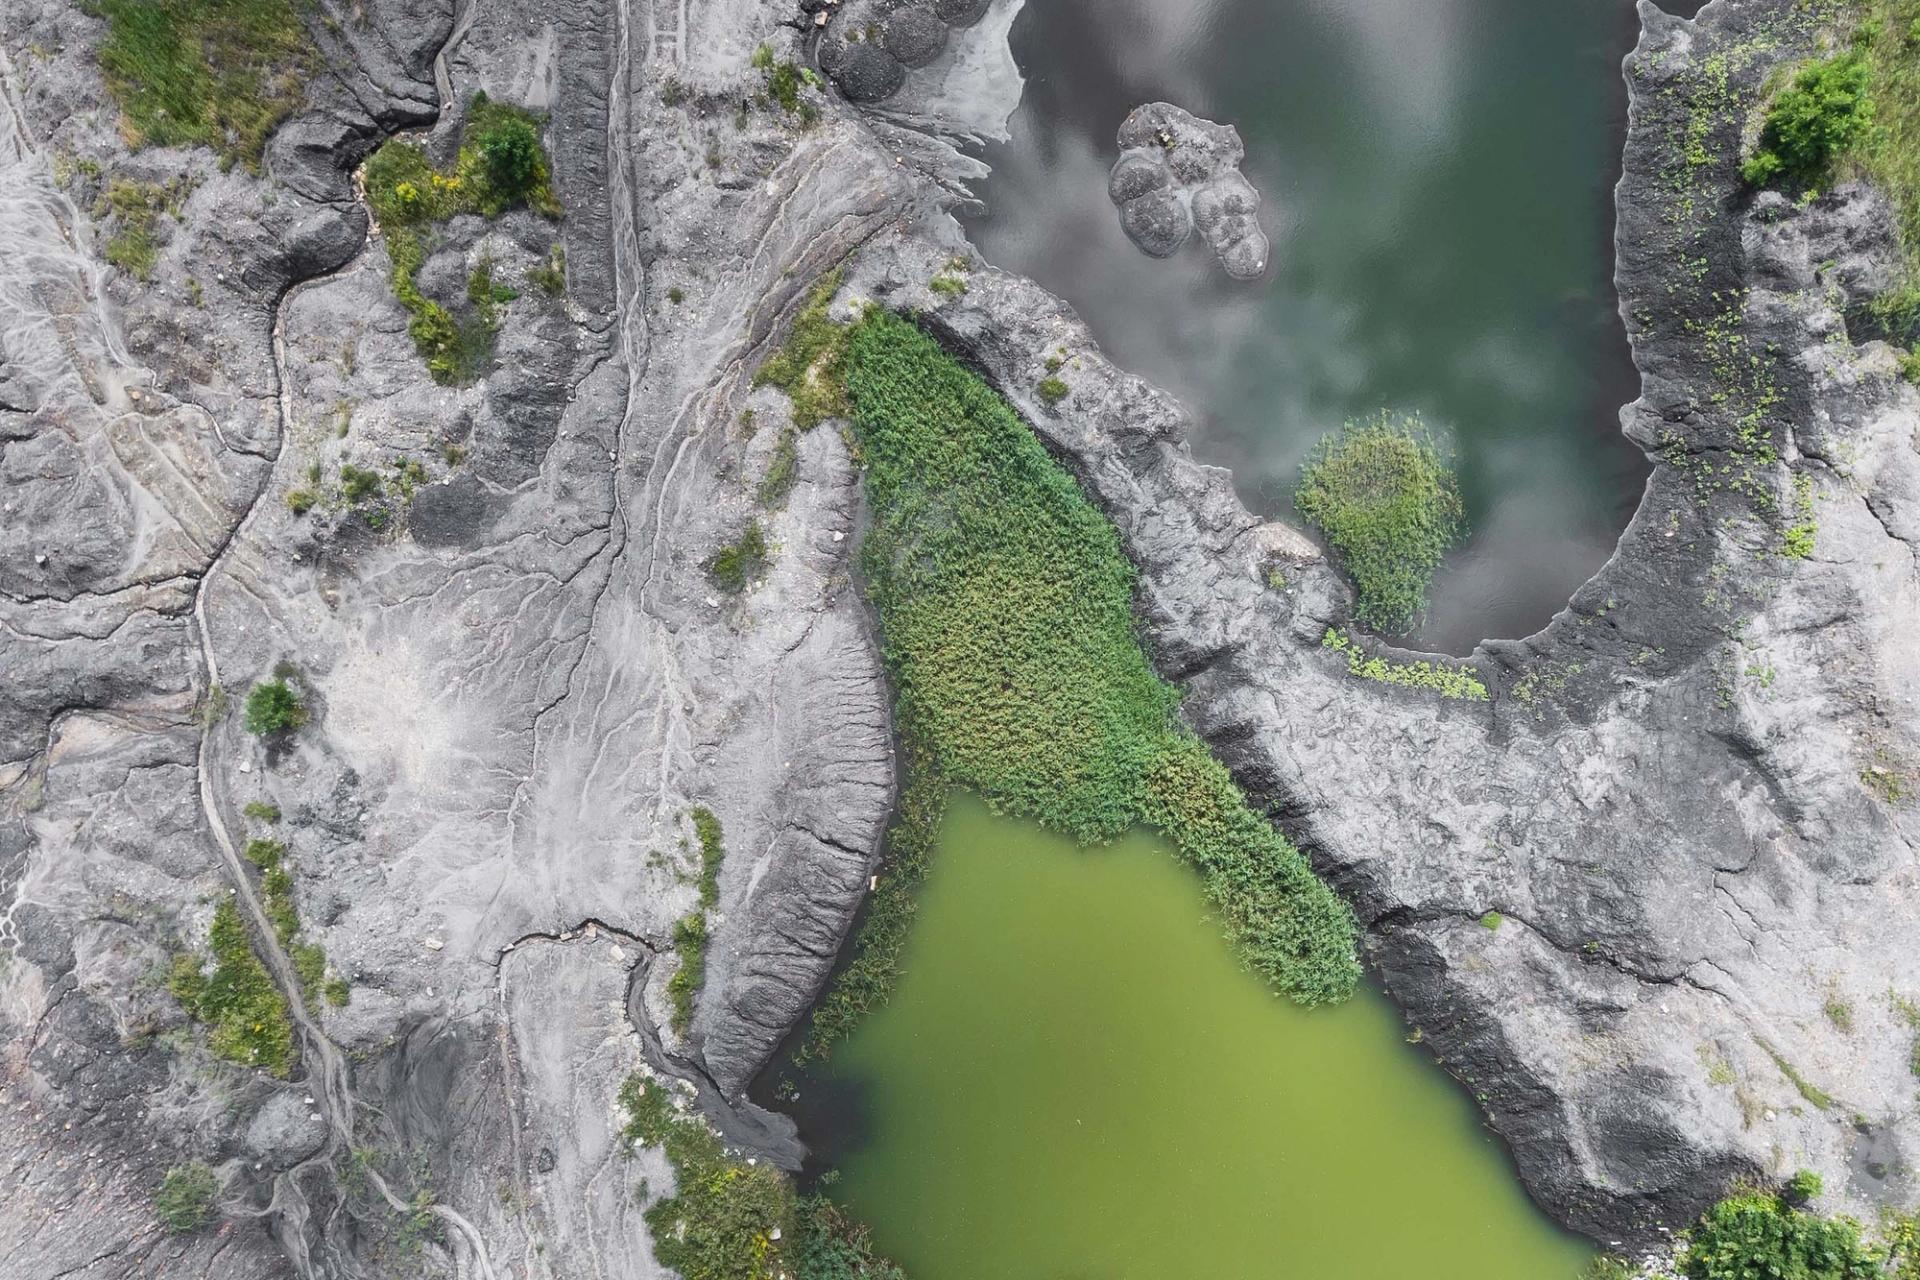 Satellite image of grey rocky terrain with green vegetation